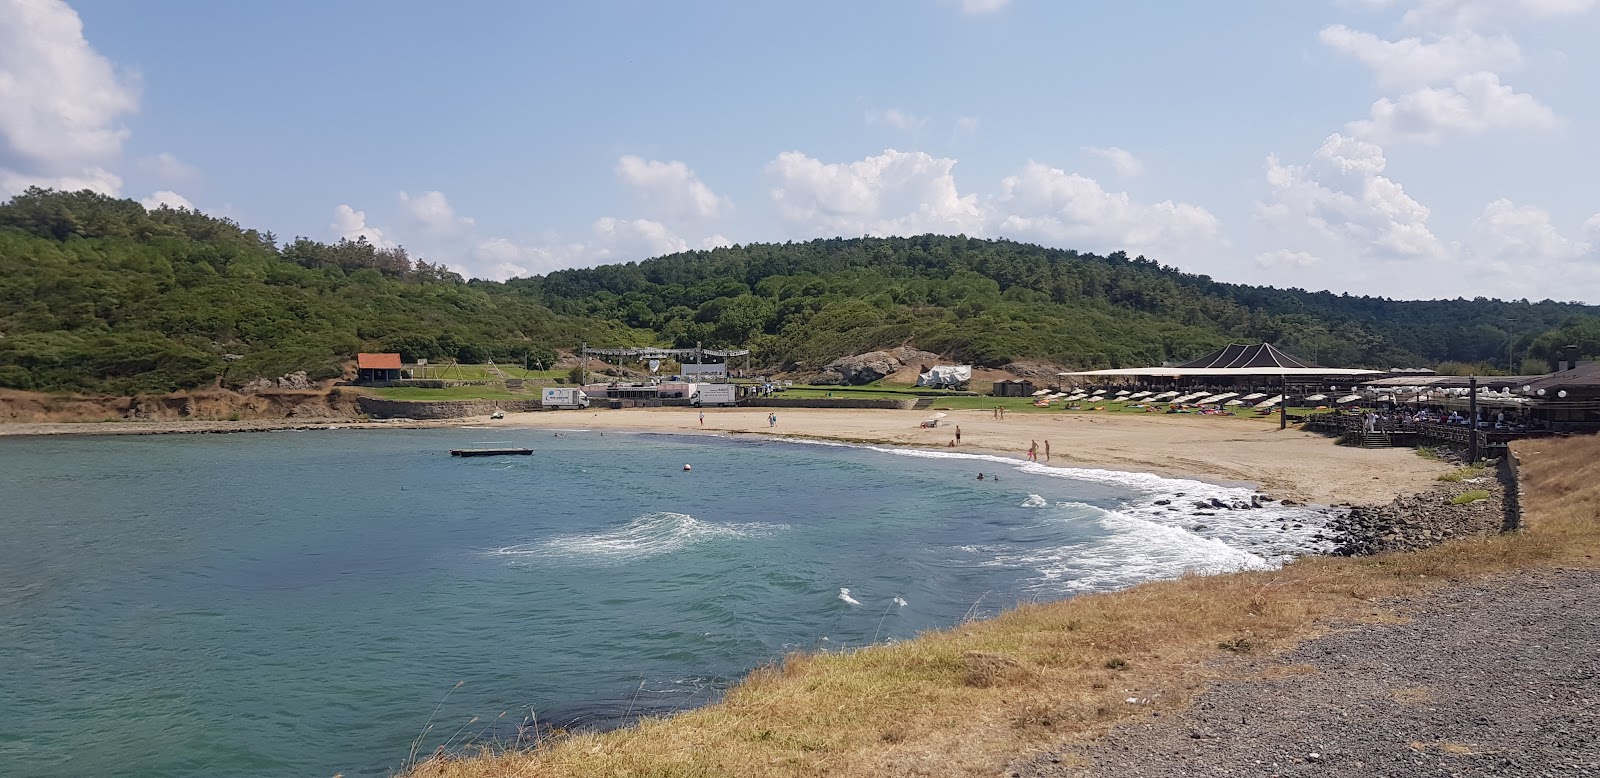 Foto af Uzunya beach bakket op af klipperne